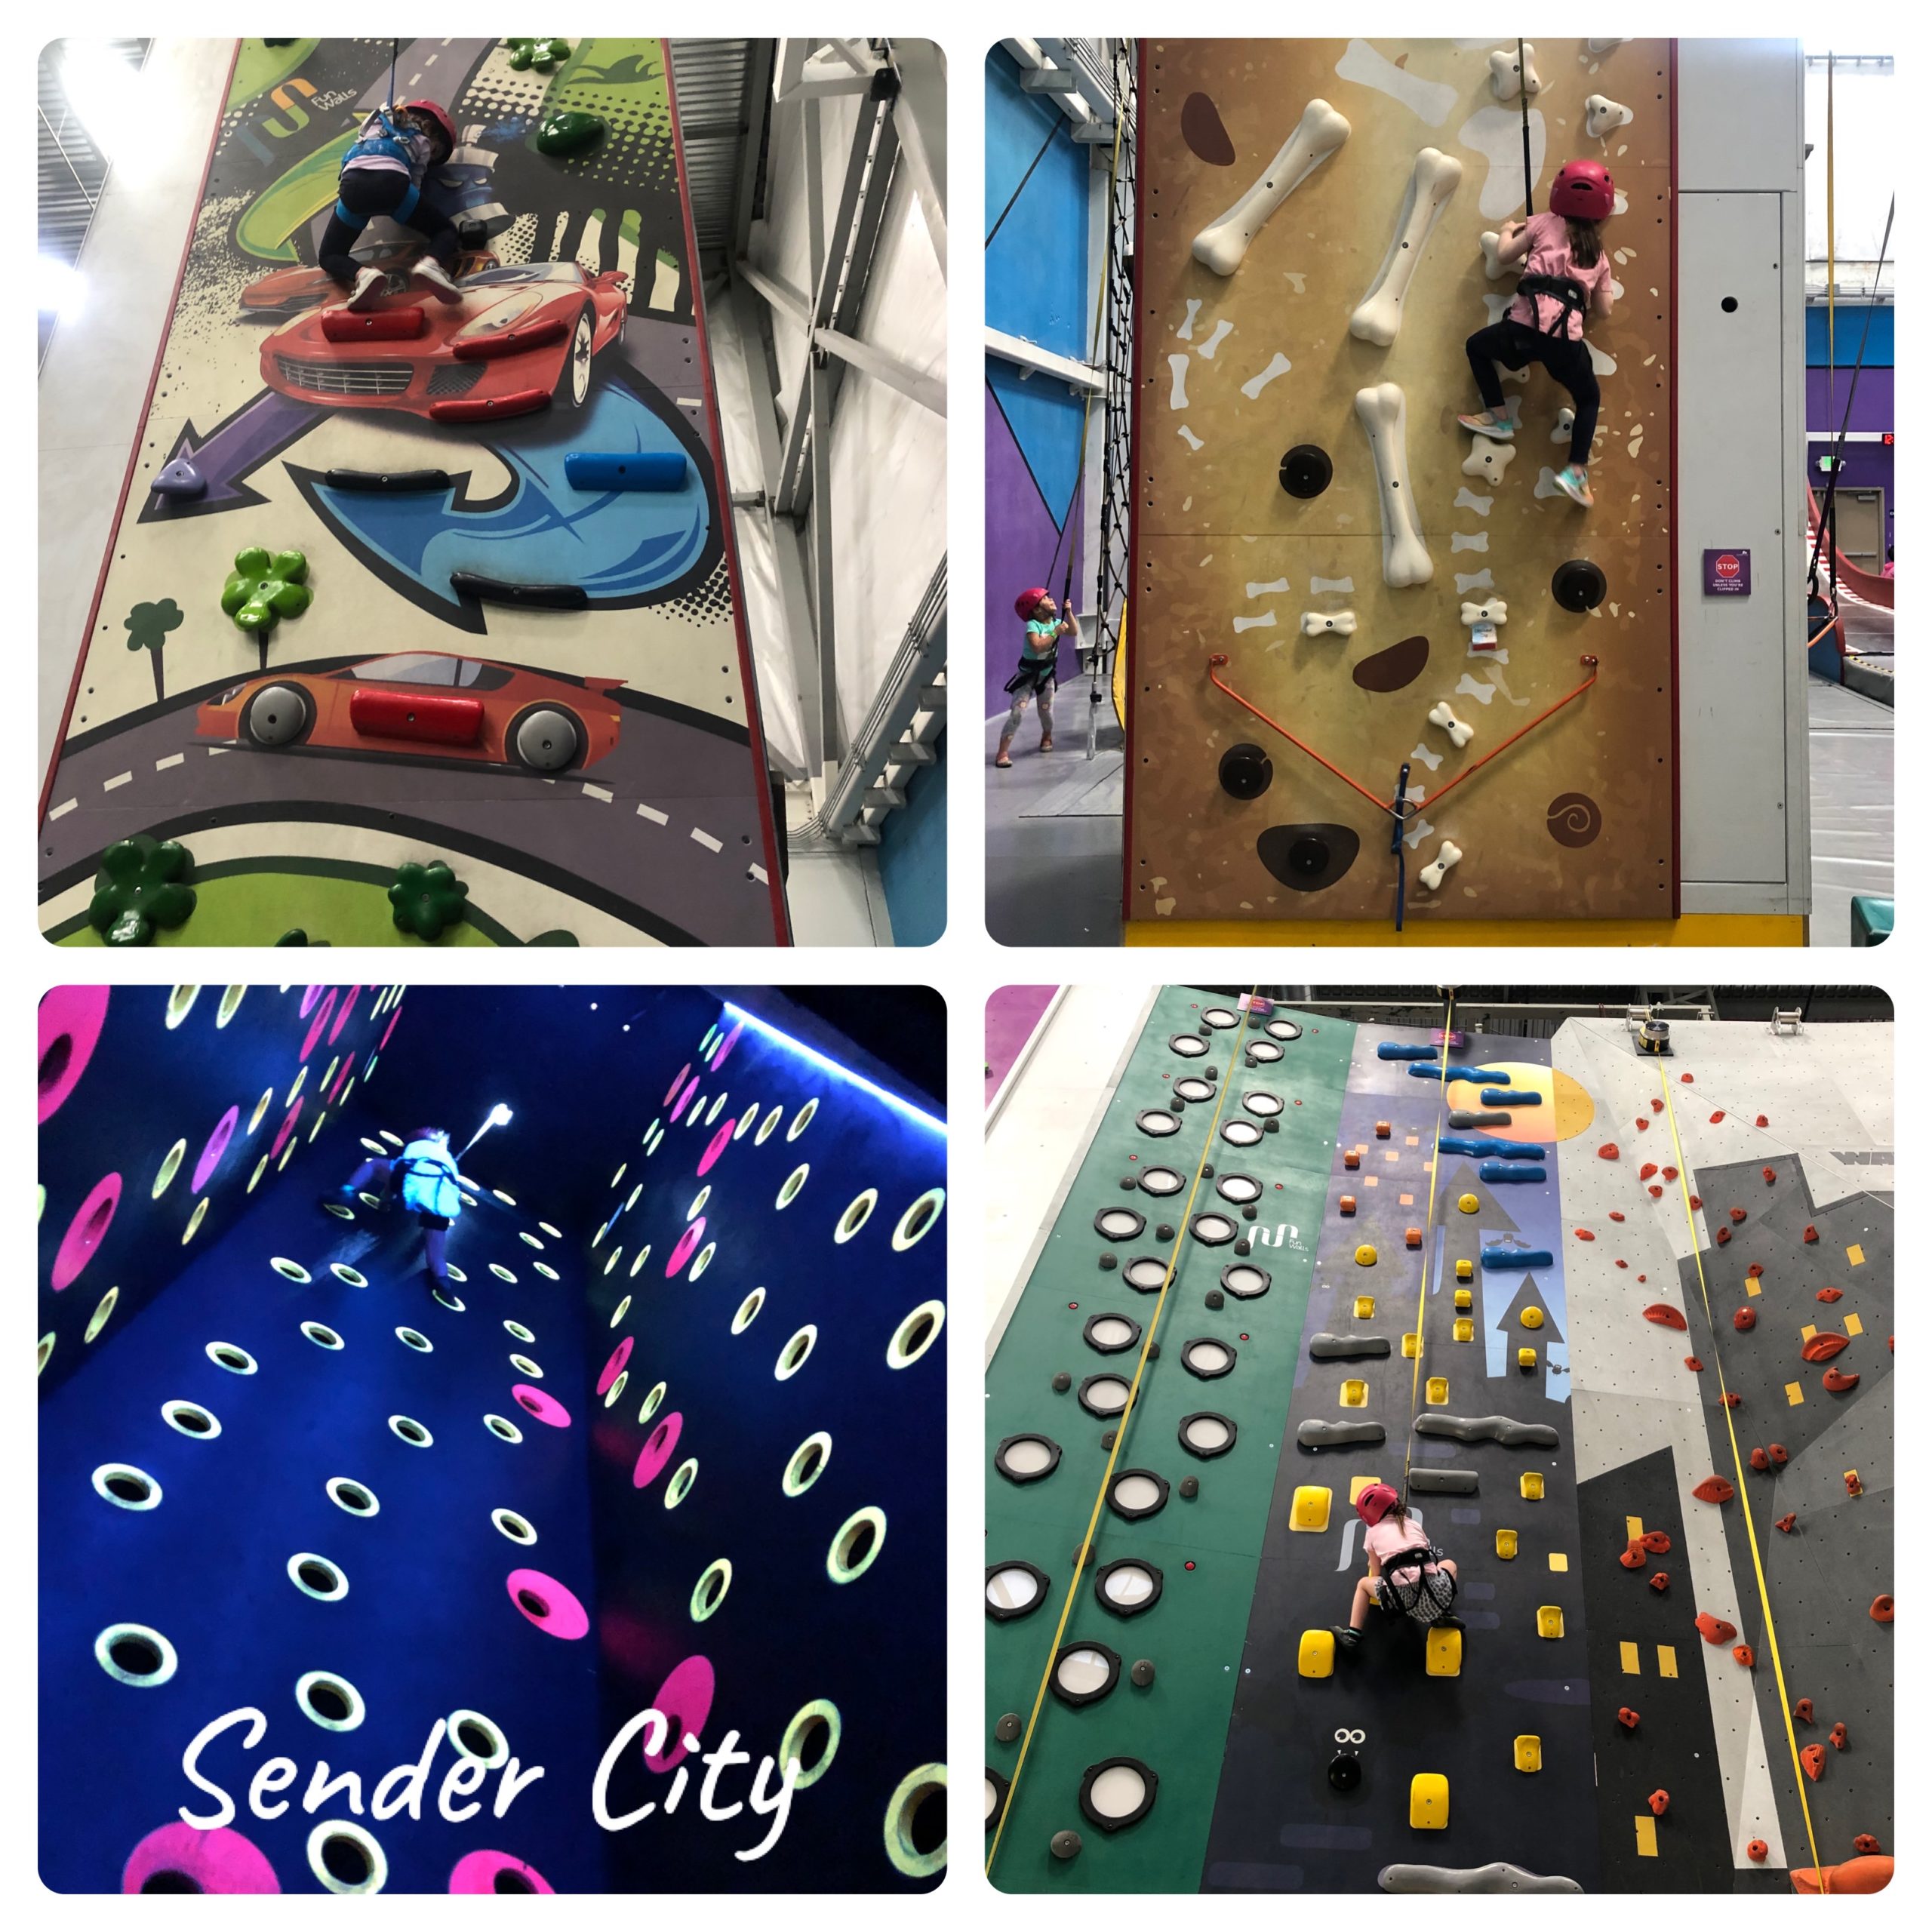 Sender city climbing walls collage